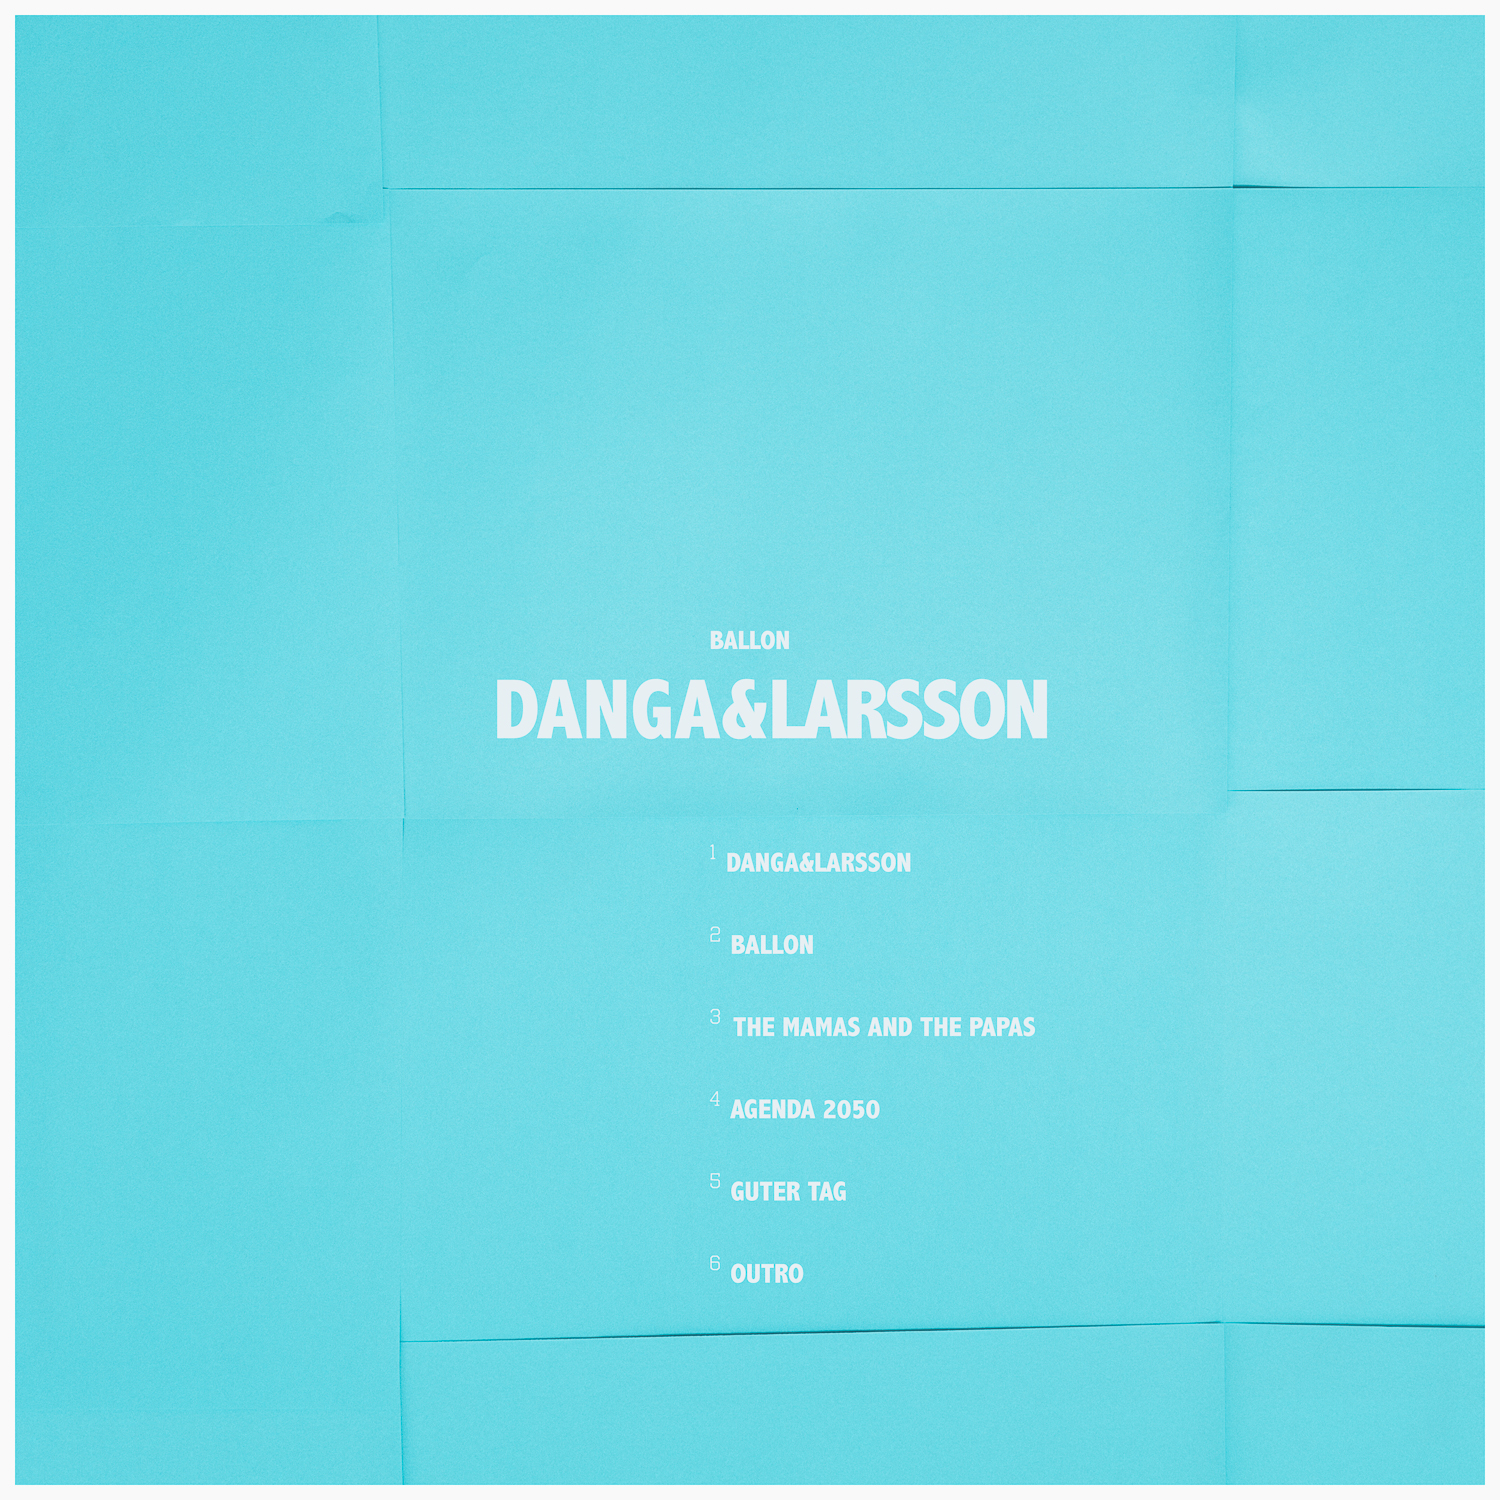  DANGA&LARSSON Paul Rossaint - Photography/Camera